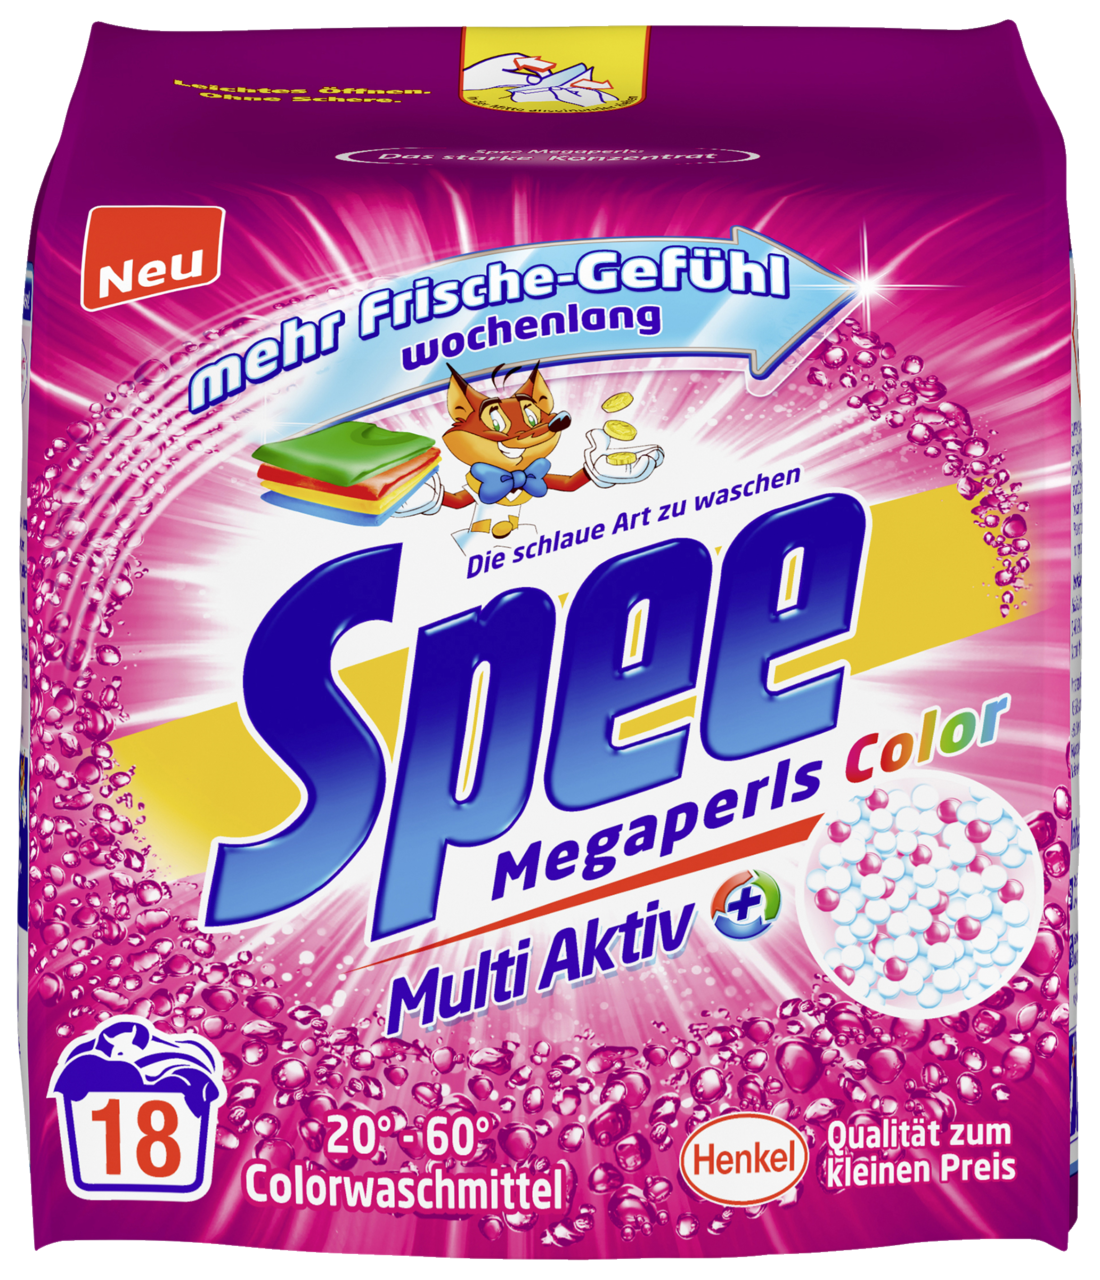 Spee Waschmittel Multi Aktiv Megaperls Color Getraenkedienst Com